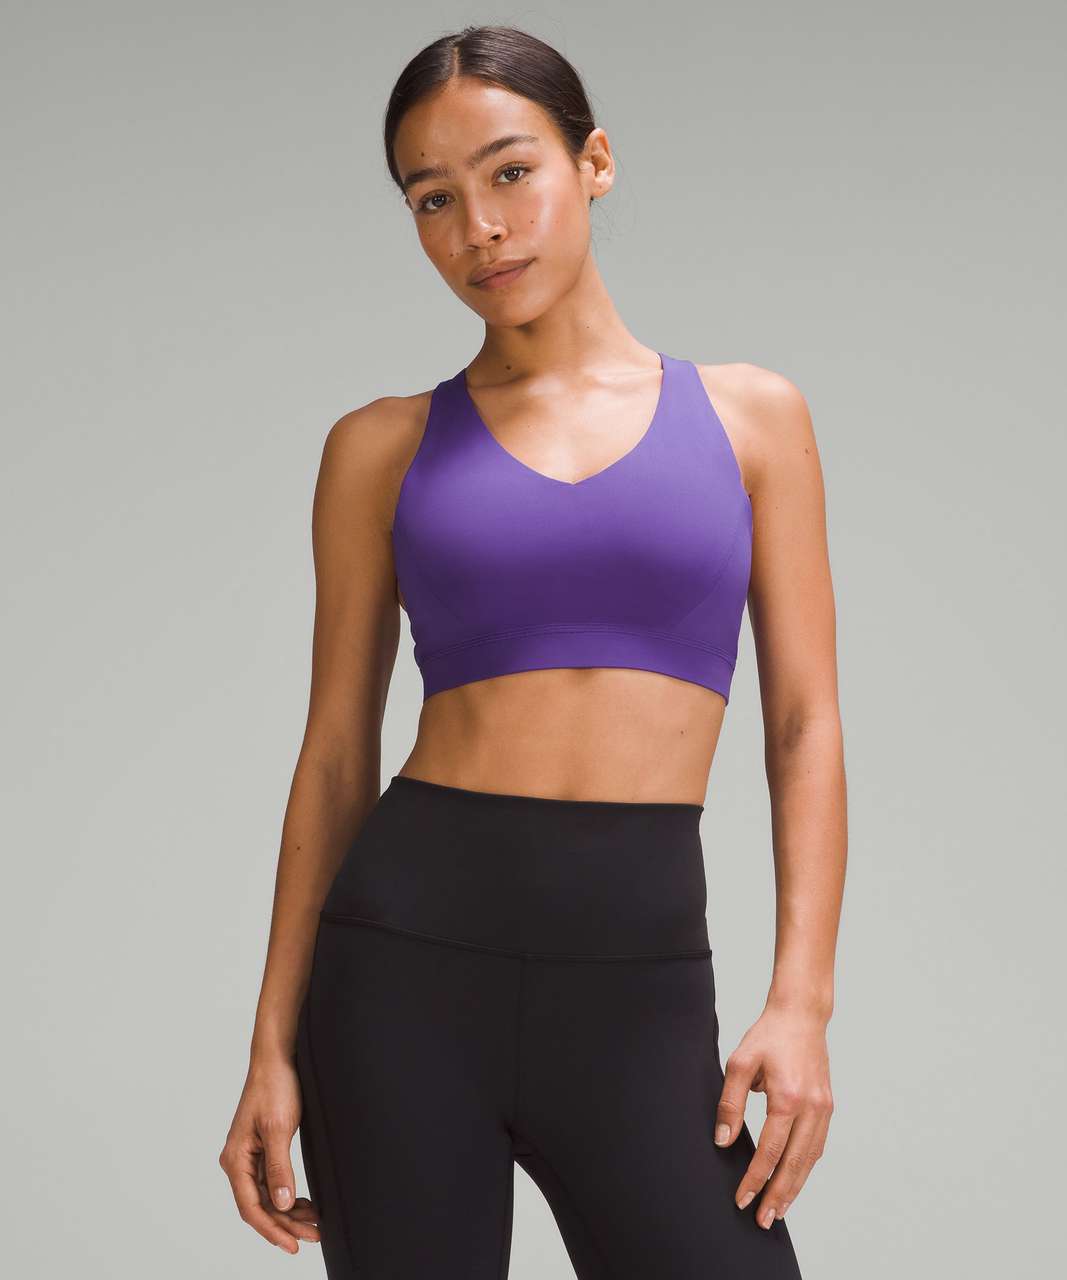 Lululemon Women's Tank Top Shirt Connected Sports Bra Yoga Purple Size S/M